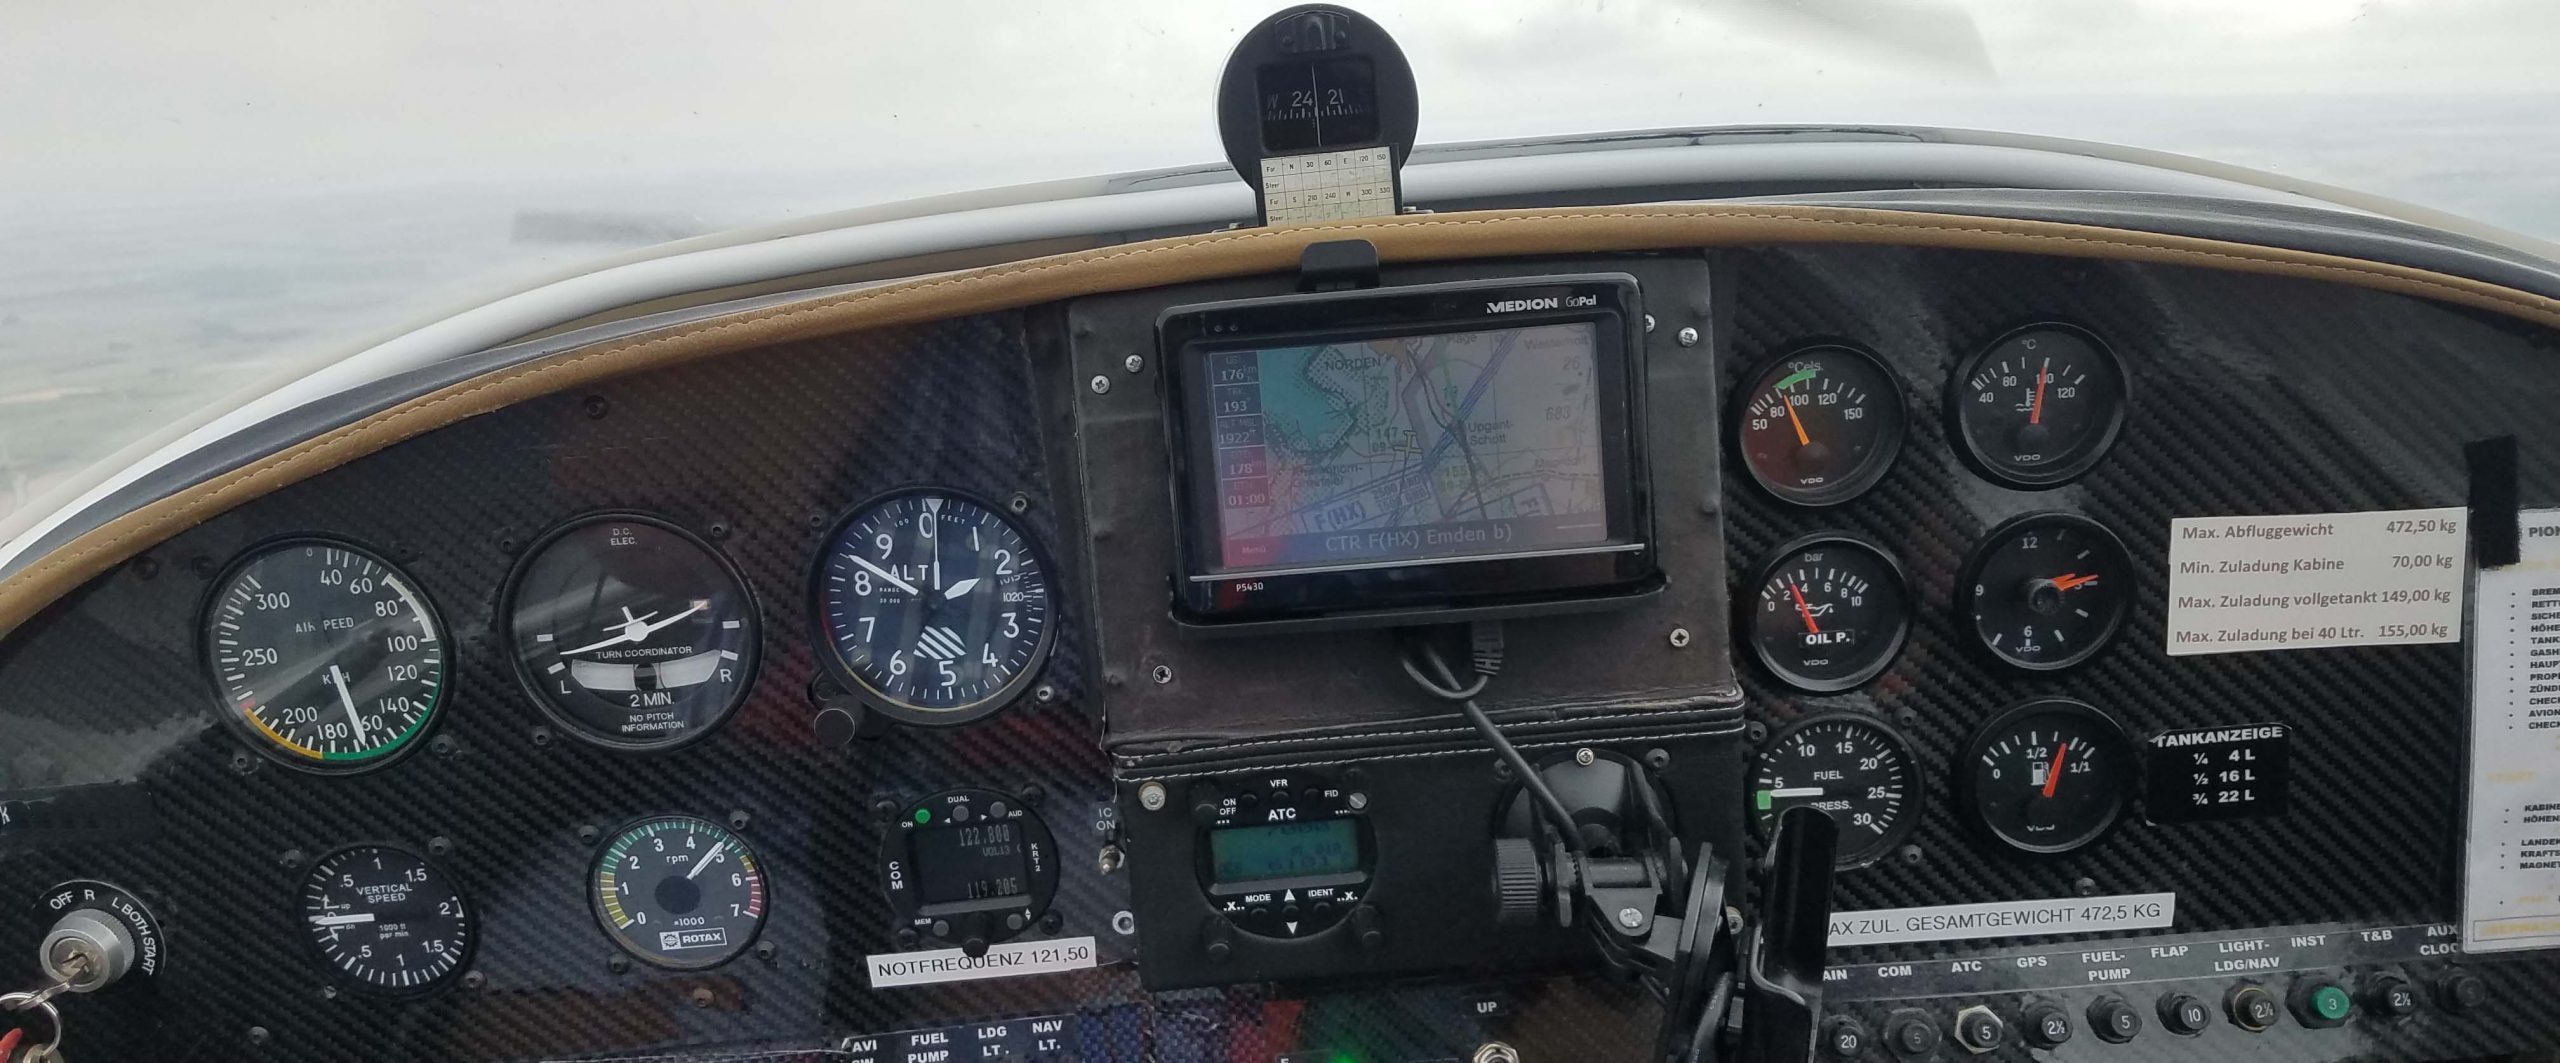 cockpit_pionier_1024x425